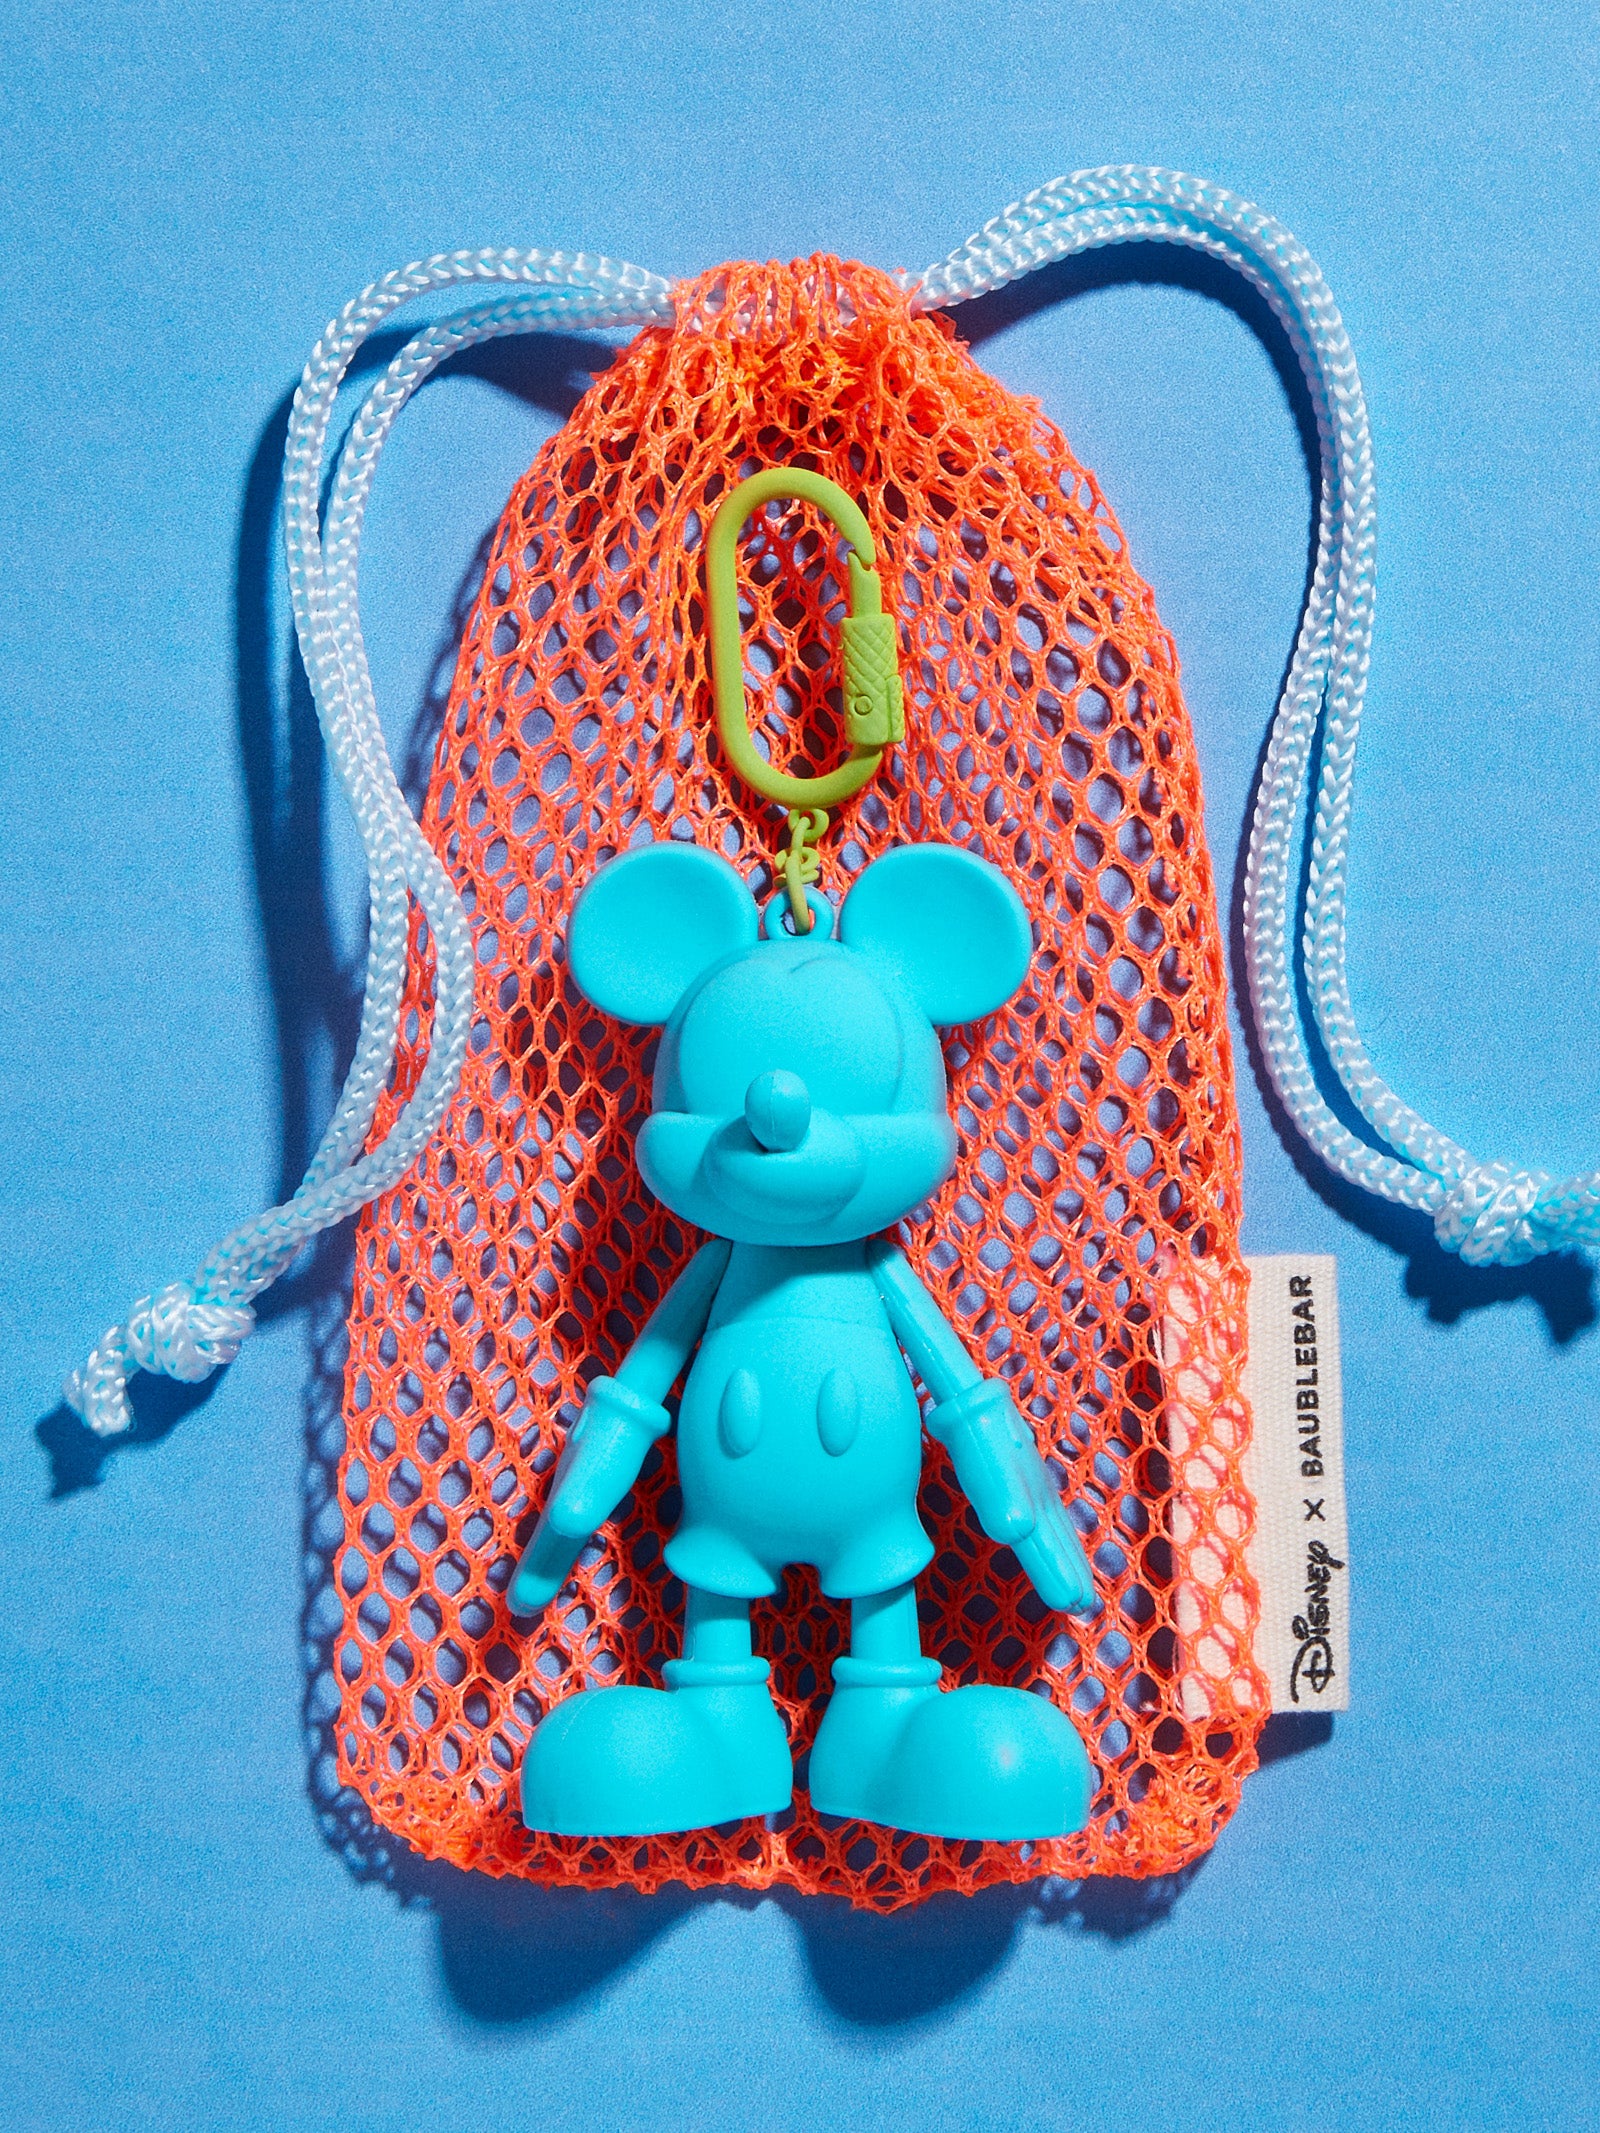 Baublebar Mickey Mouse Disney Bag Charm - Multicolored Enamel